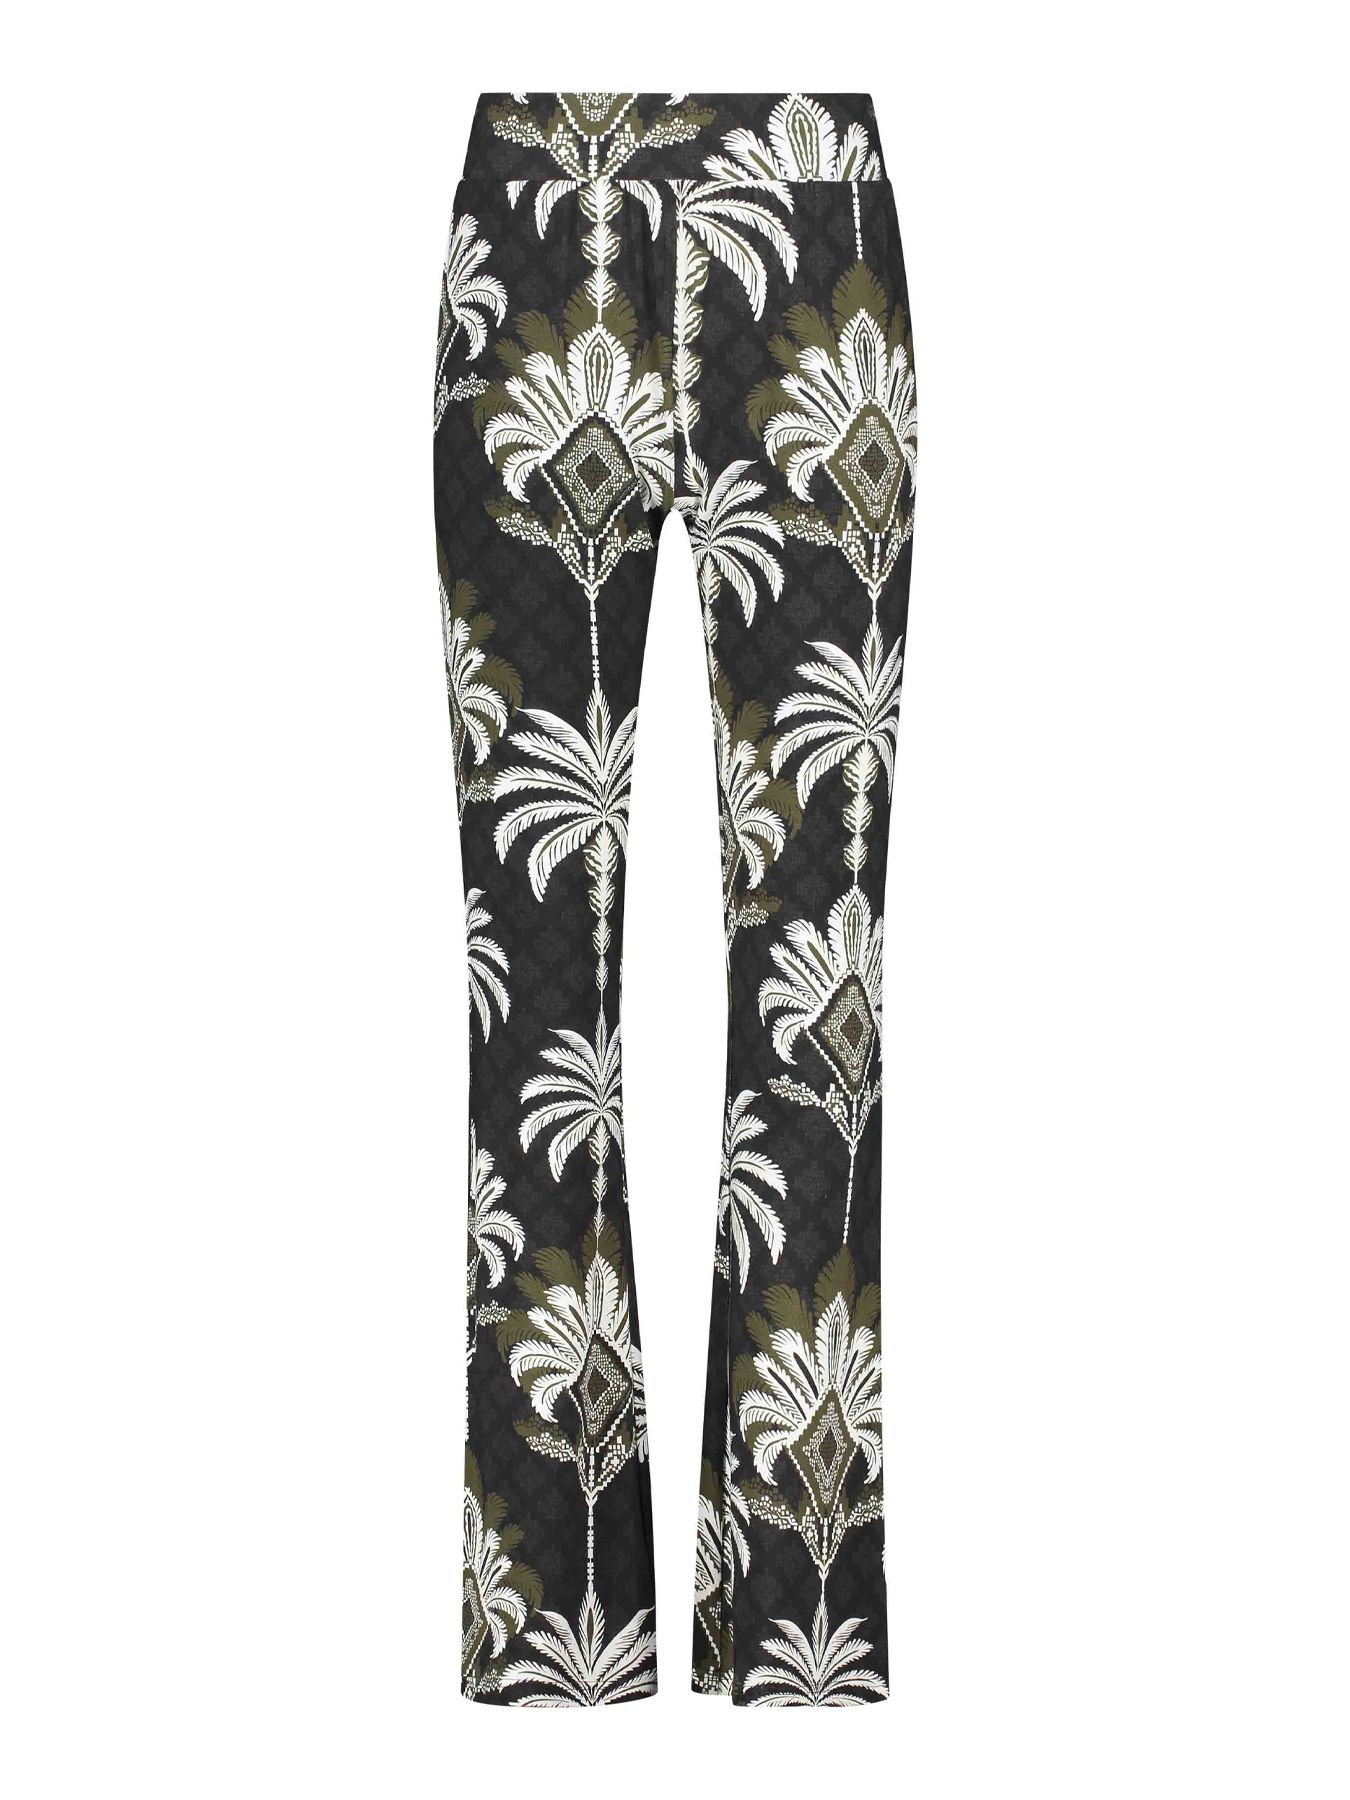 Tramontana Trousers Palm Print Blacks 009998 2900144209049